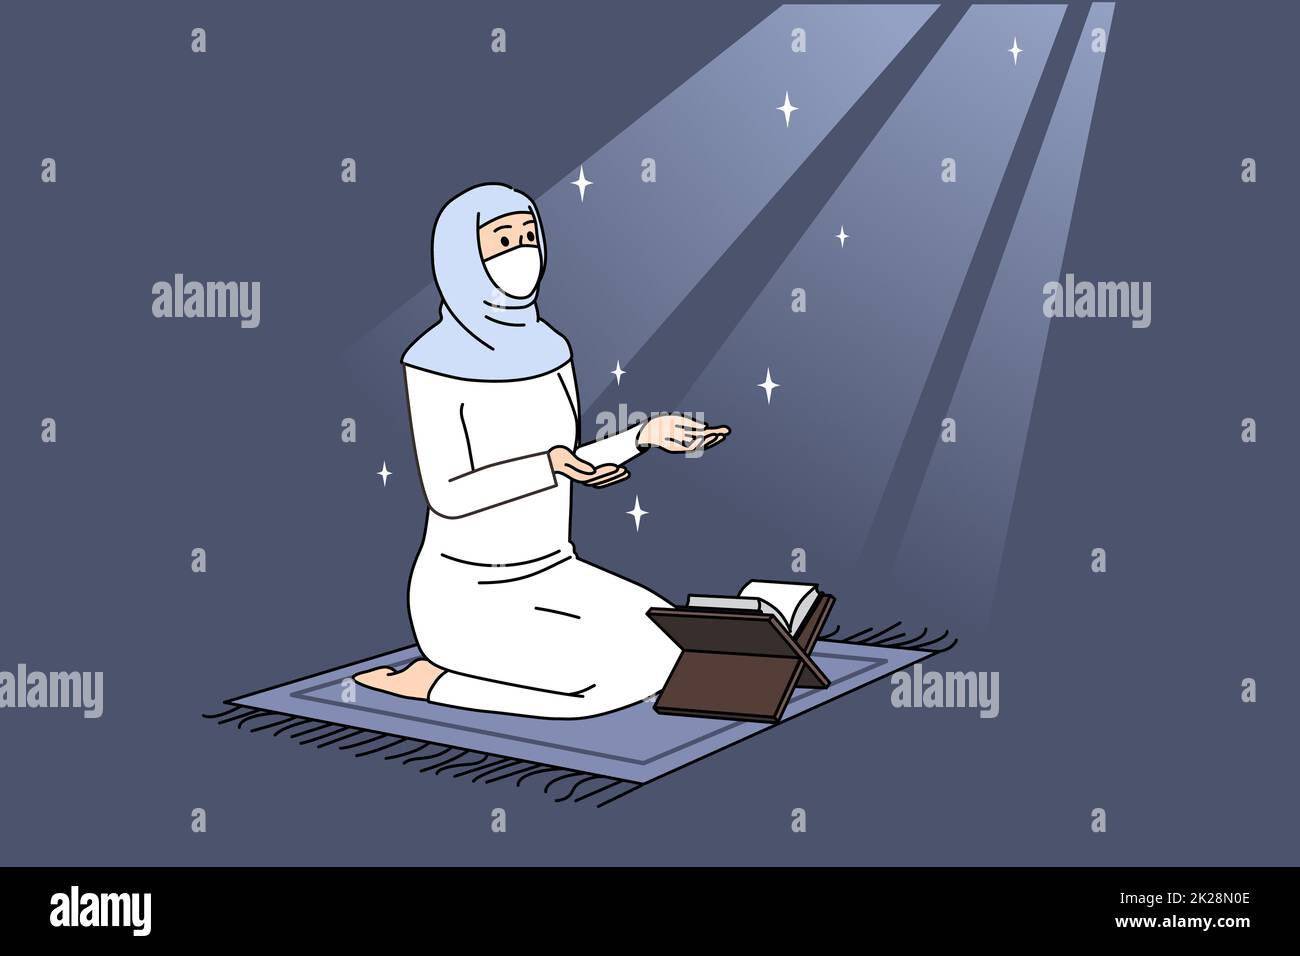 Arabic islamic religion and spirituality concept. Stock Photo